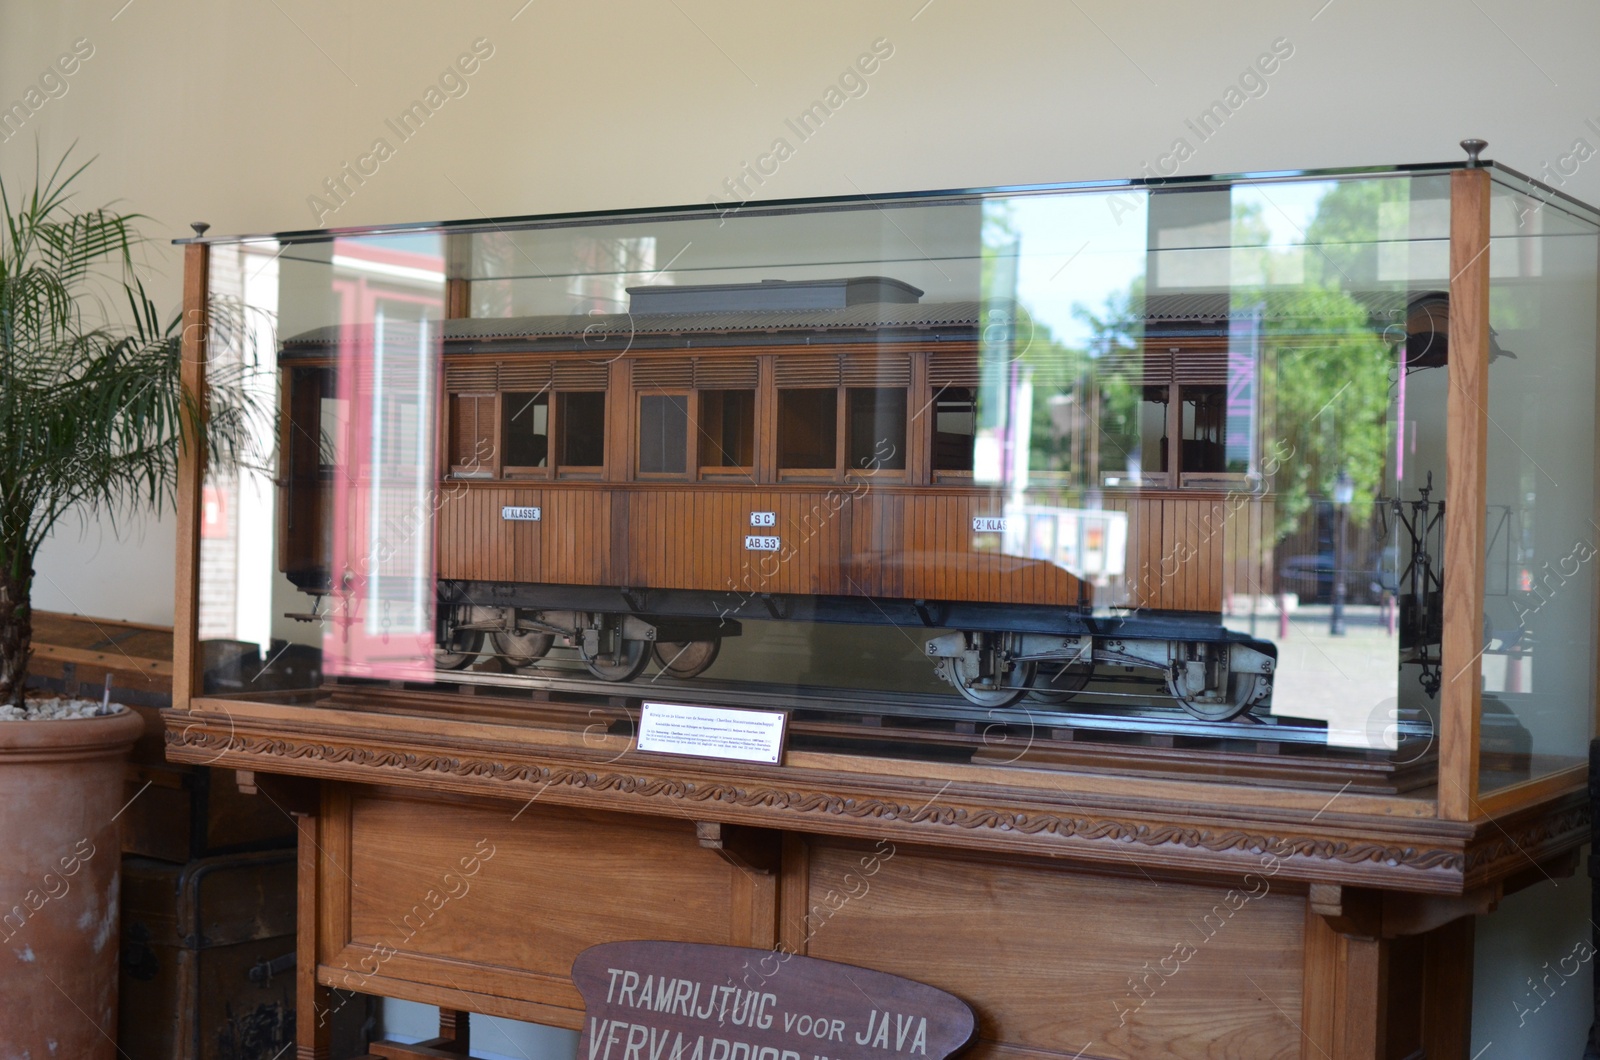 Photo of Utrecht, Netherlands - July 23, 2022: Model of old train on display in Spoorwegmuseum